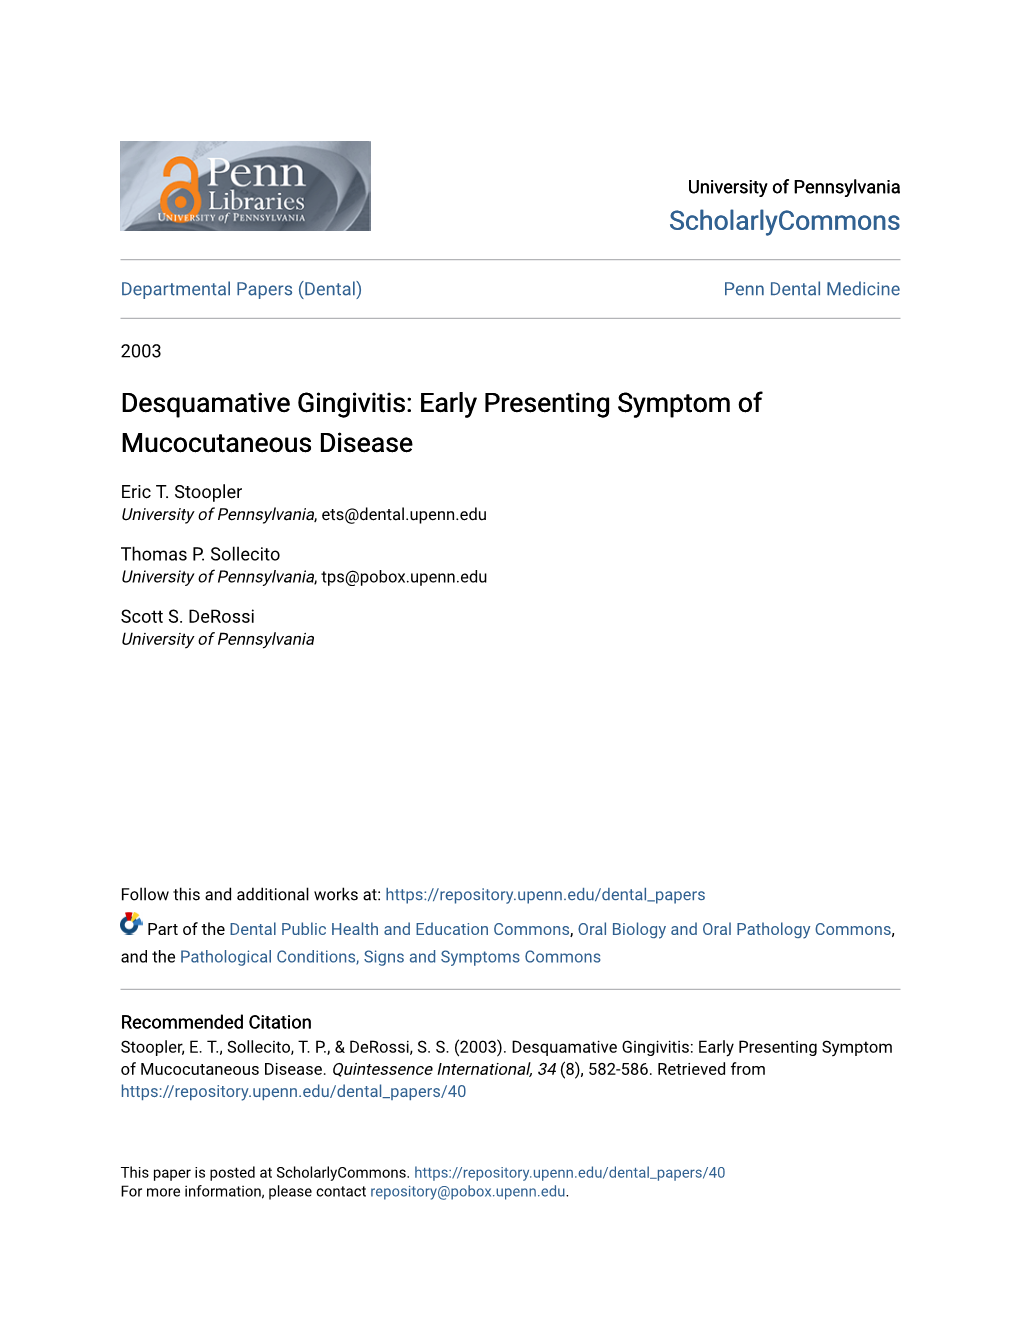 Desquamative Gingivitis: Early Presenting Symptom of Mucocutaneous Disease